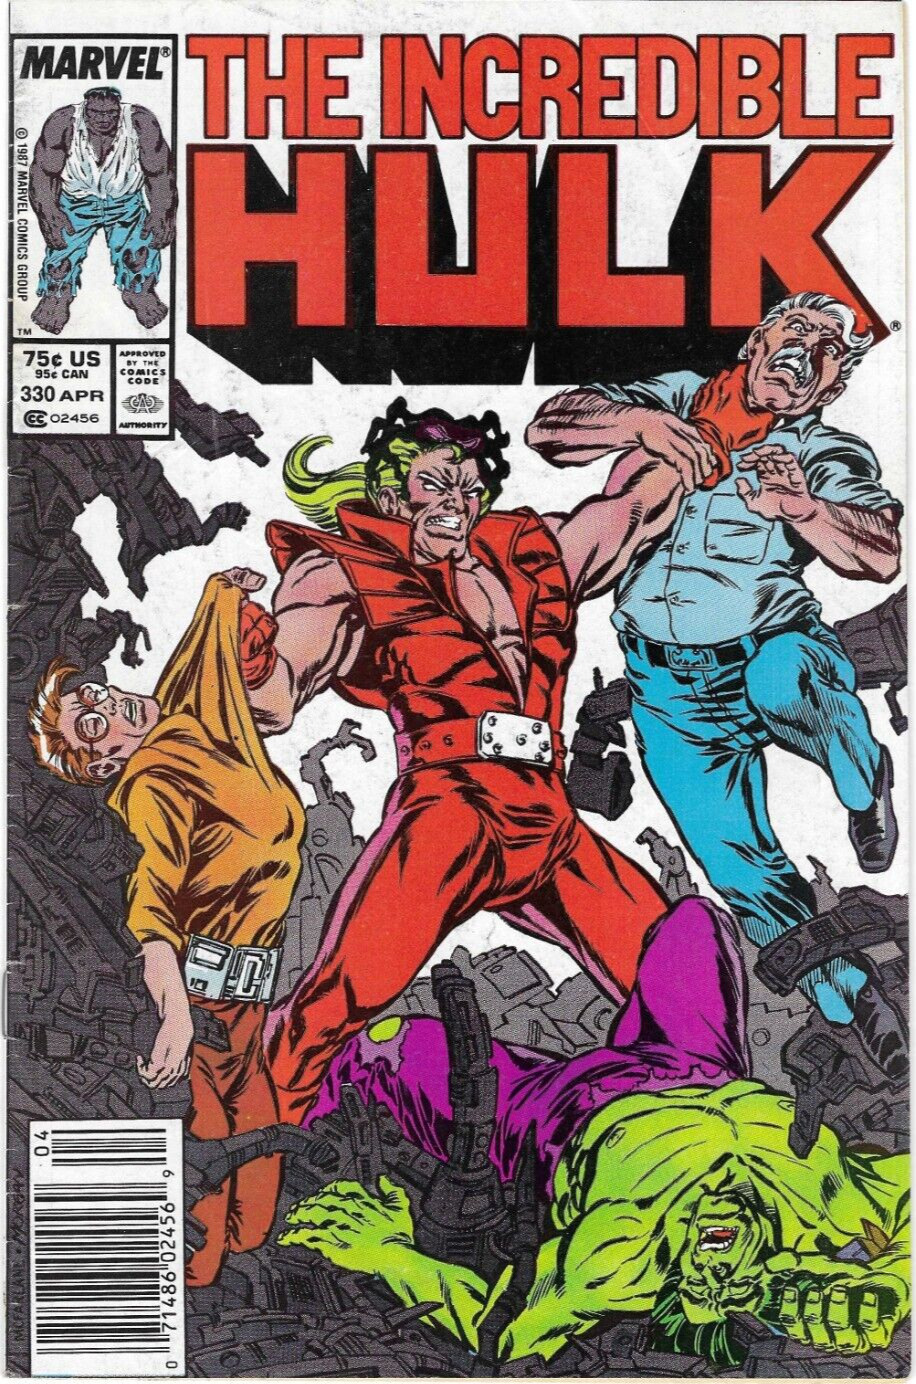 The Incredible Hulk #330 : MARVEL : 1987 : F/VF